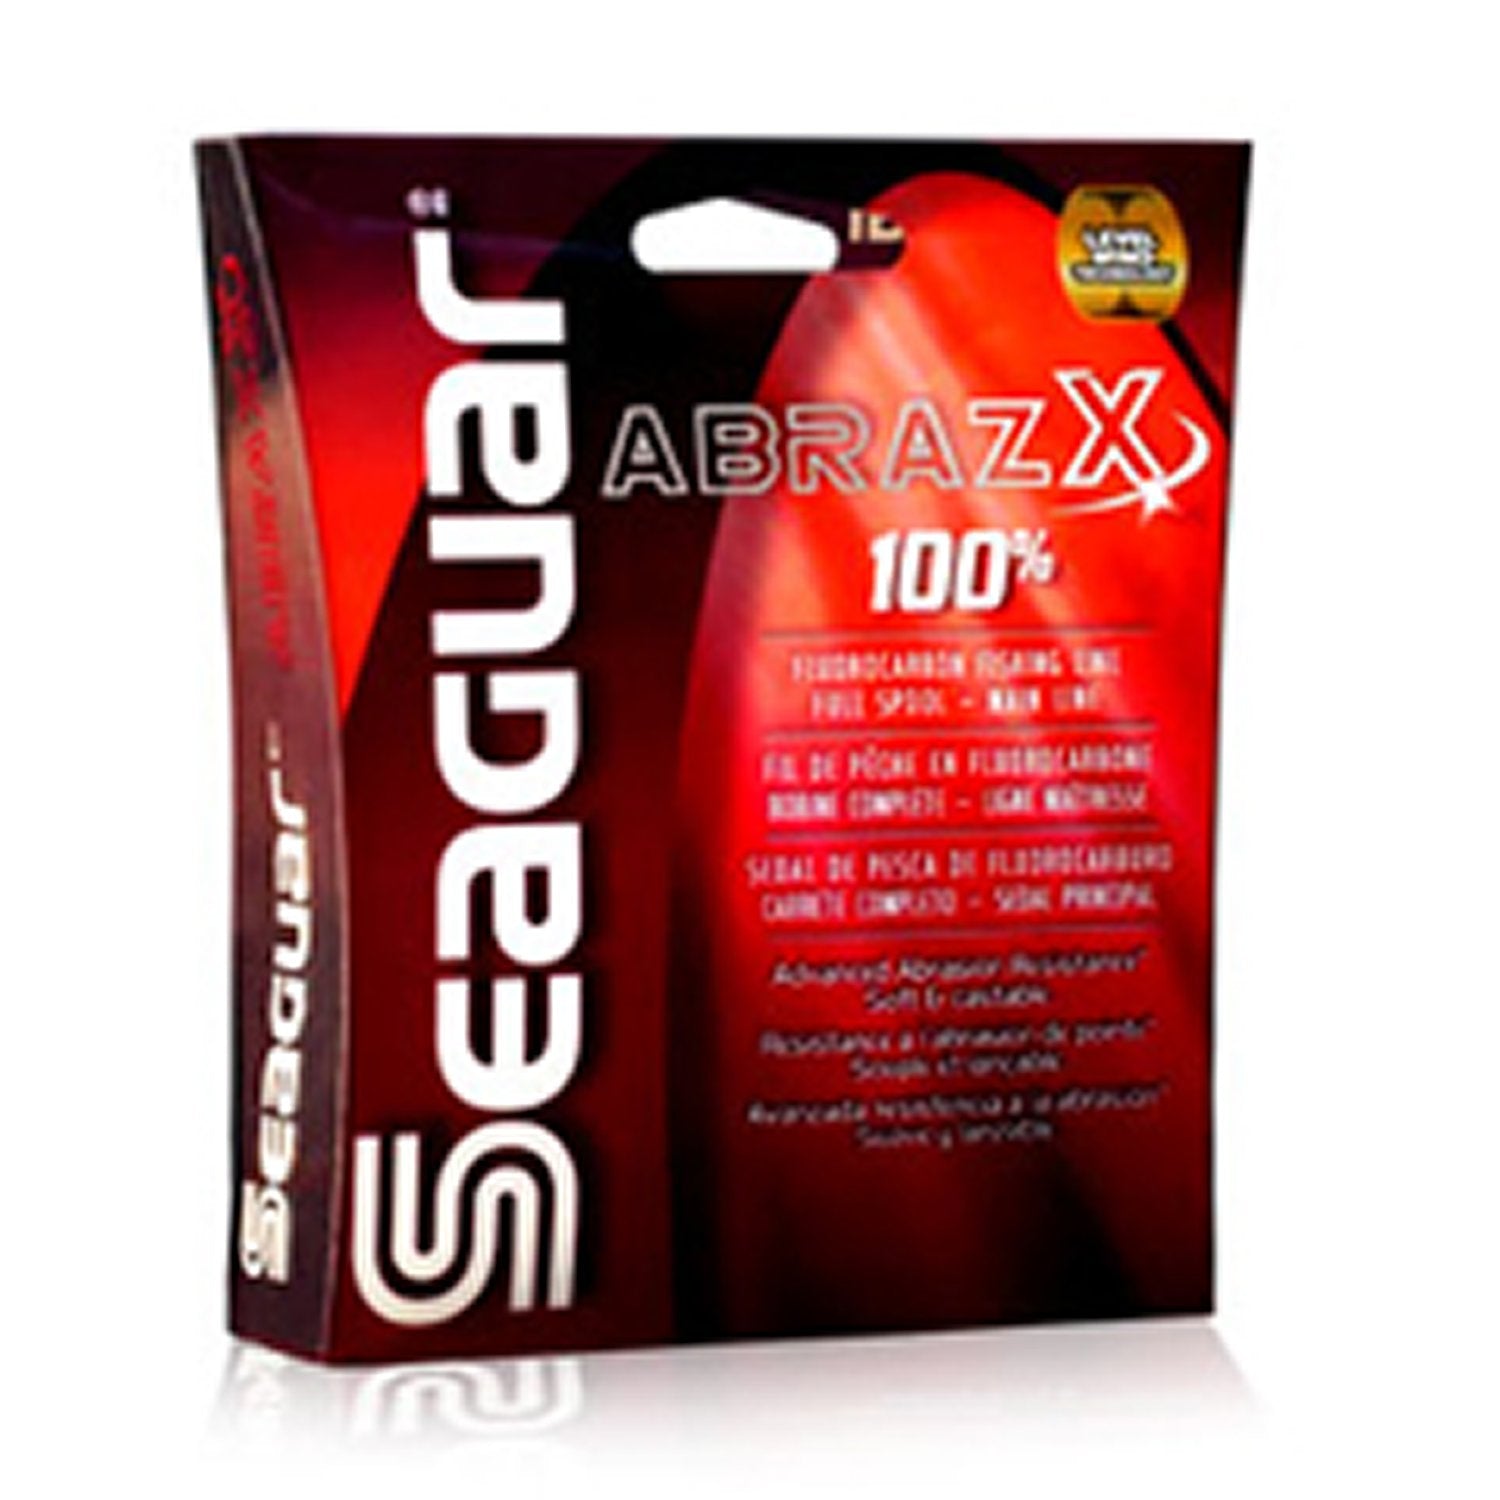 Seaguar AbrazX 100% Fluorocarbon Main Line 200yd